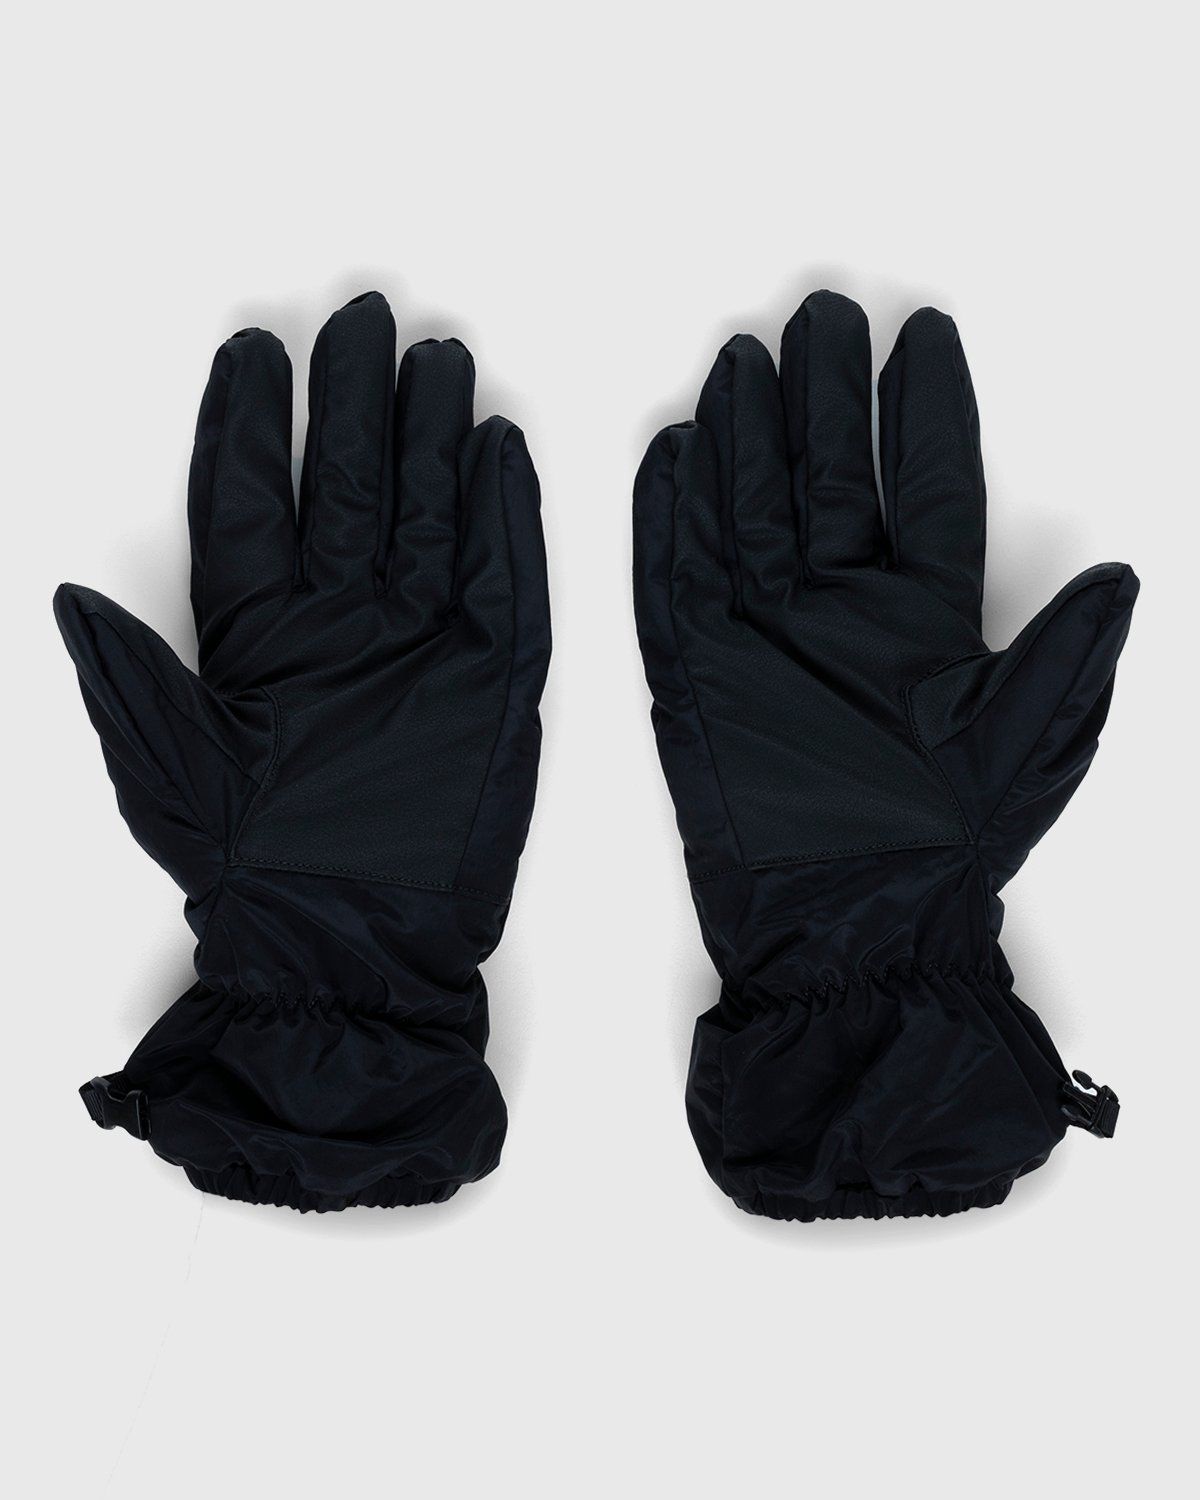 Stone Island – Gloves Black - Gloves - Black - Image 3